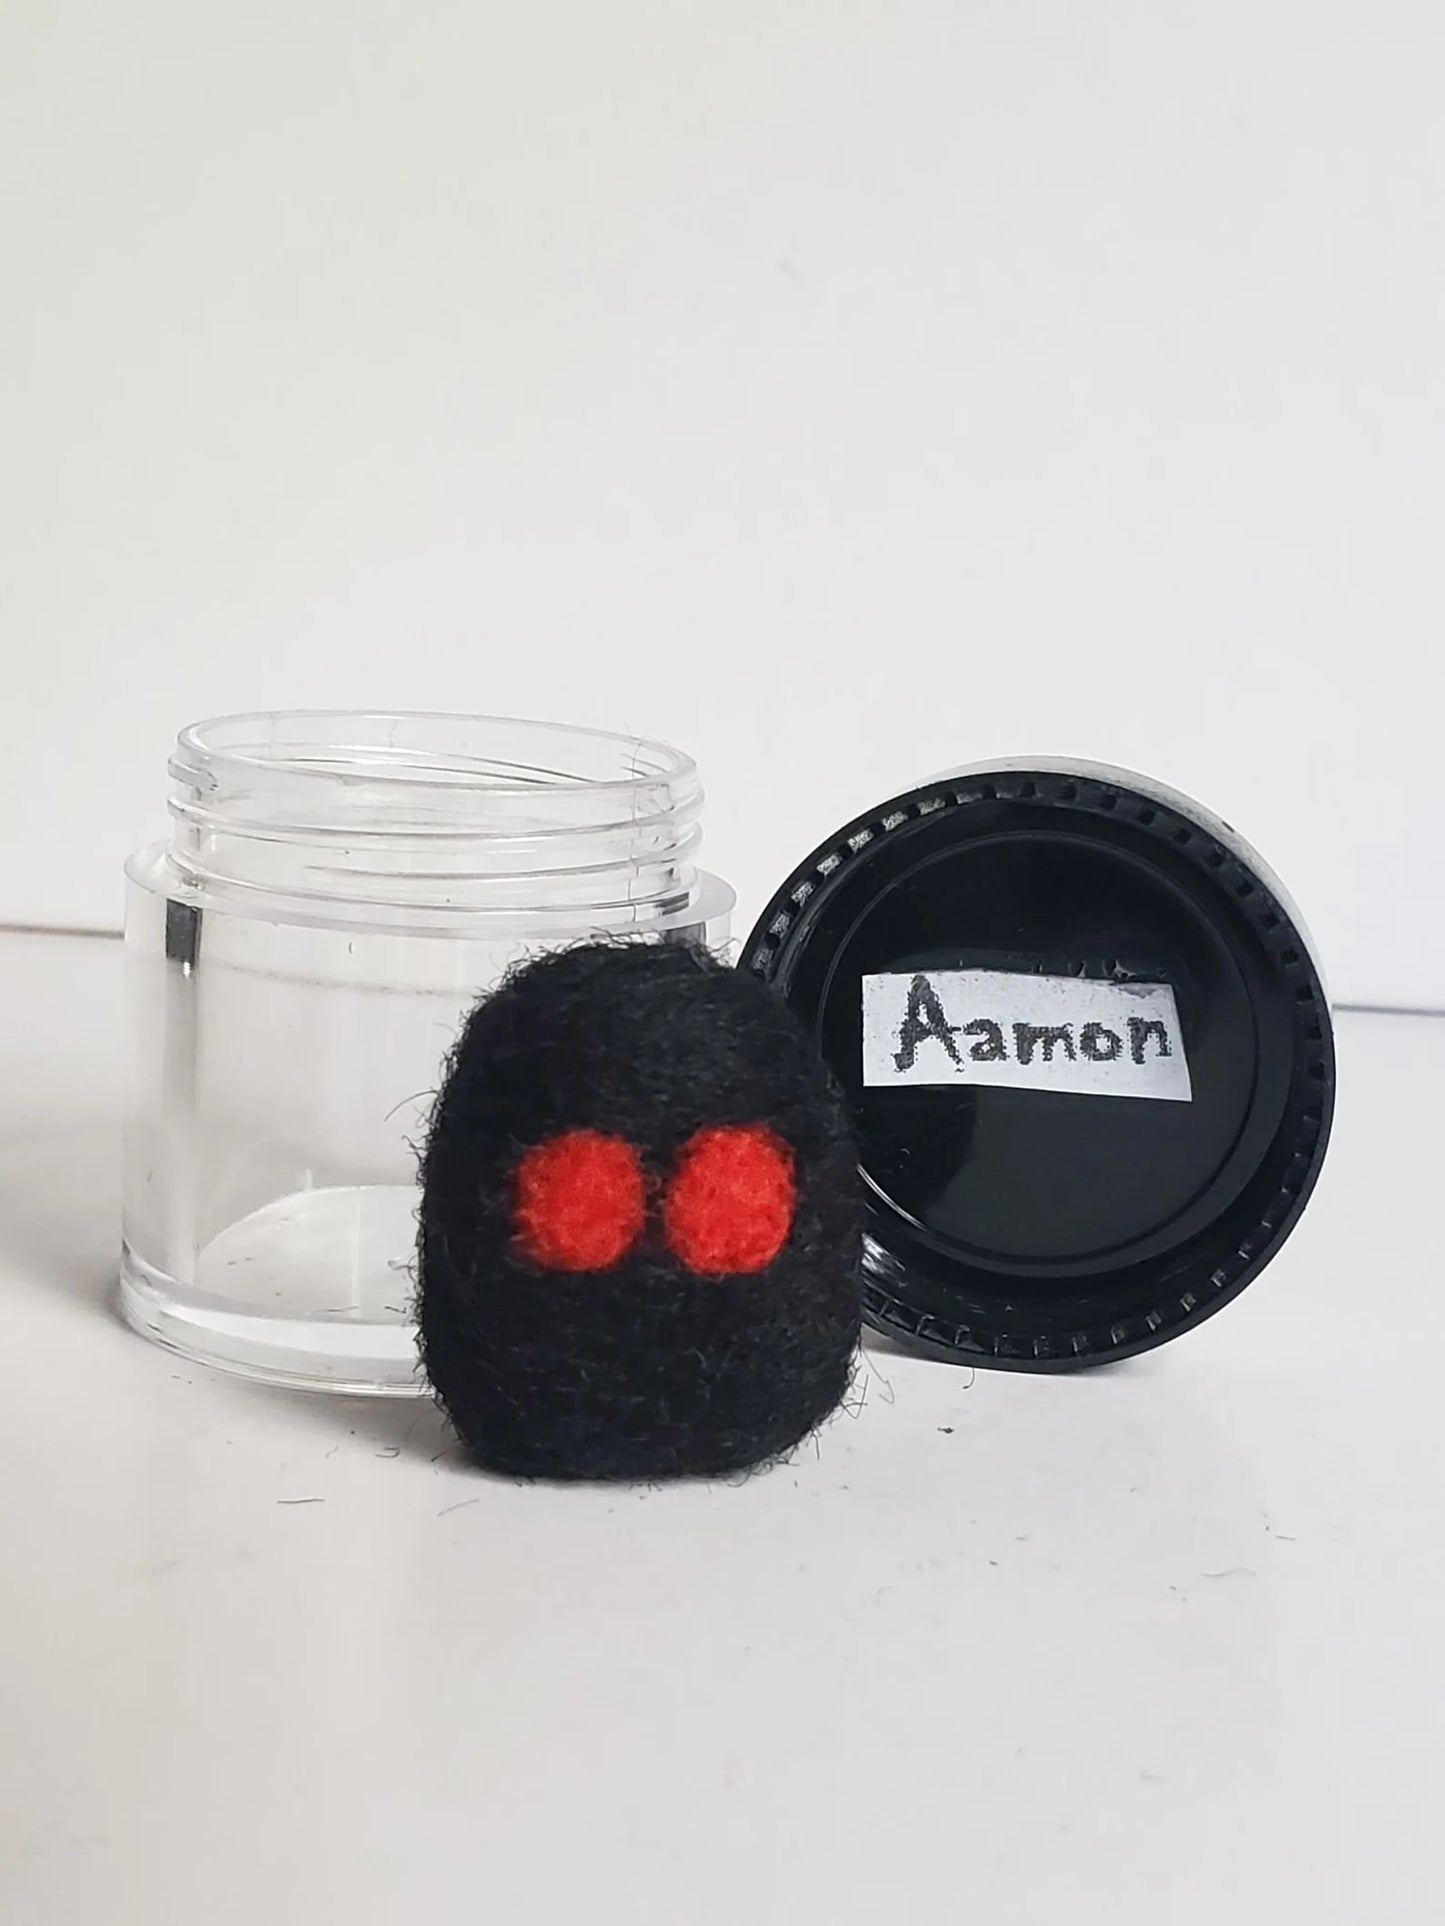 Adopt a Tiny Demon in a Jar